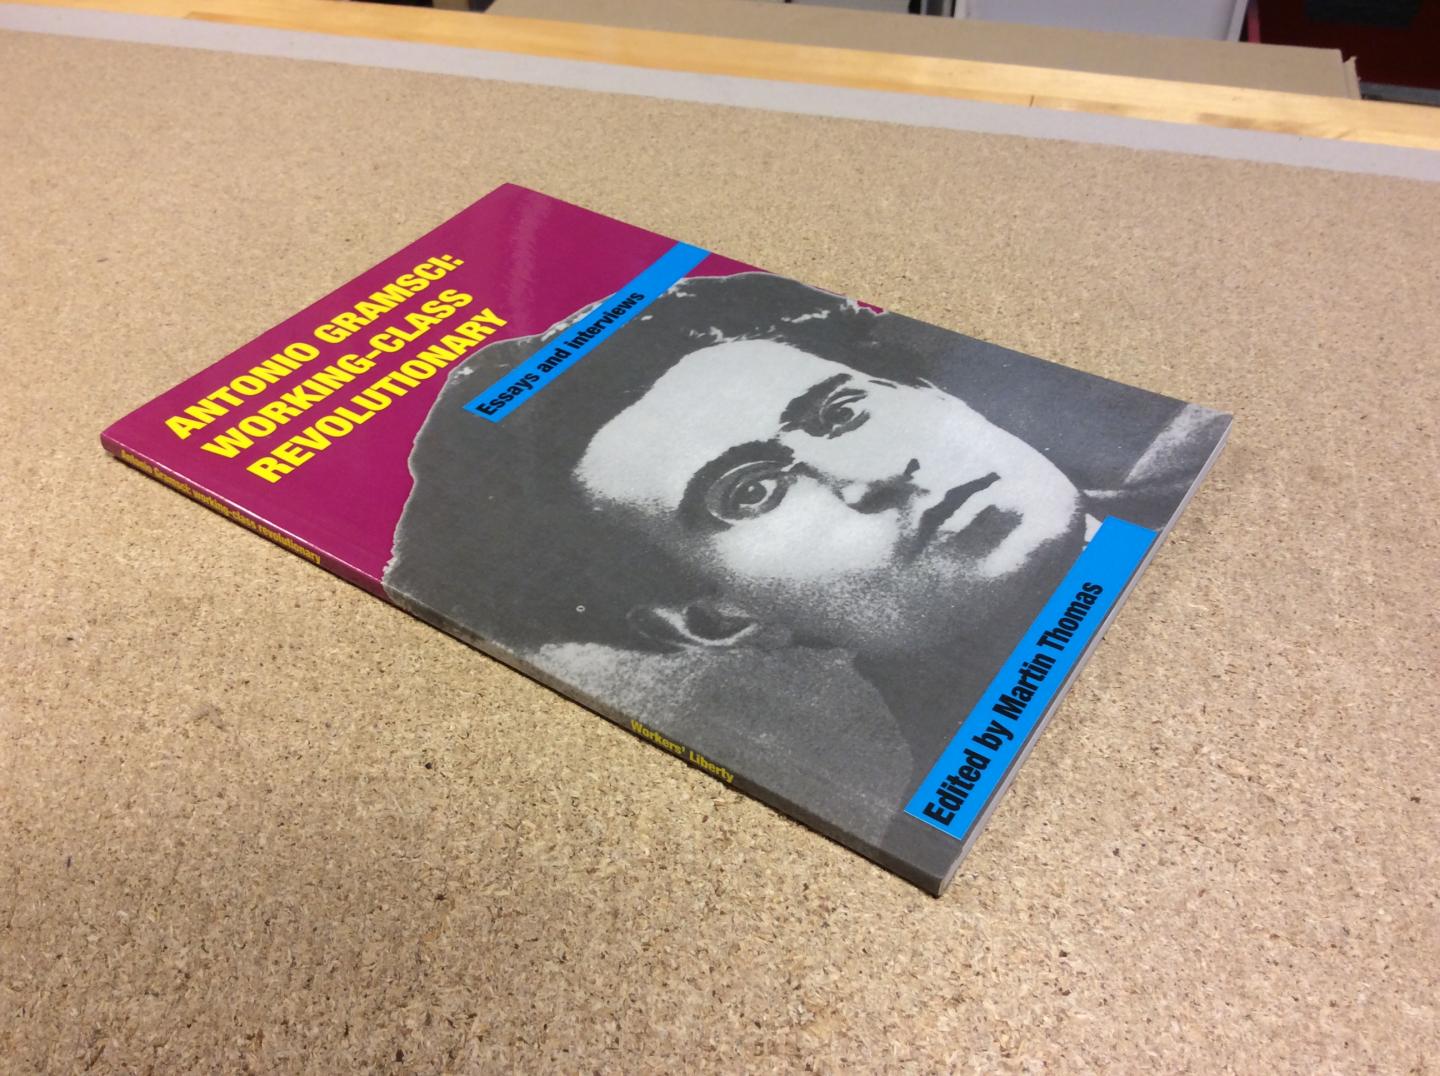 Thomas, Martin (Ed.) - Antonio Gramsci: working-class revolutionary. Essays and interviews